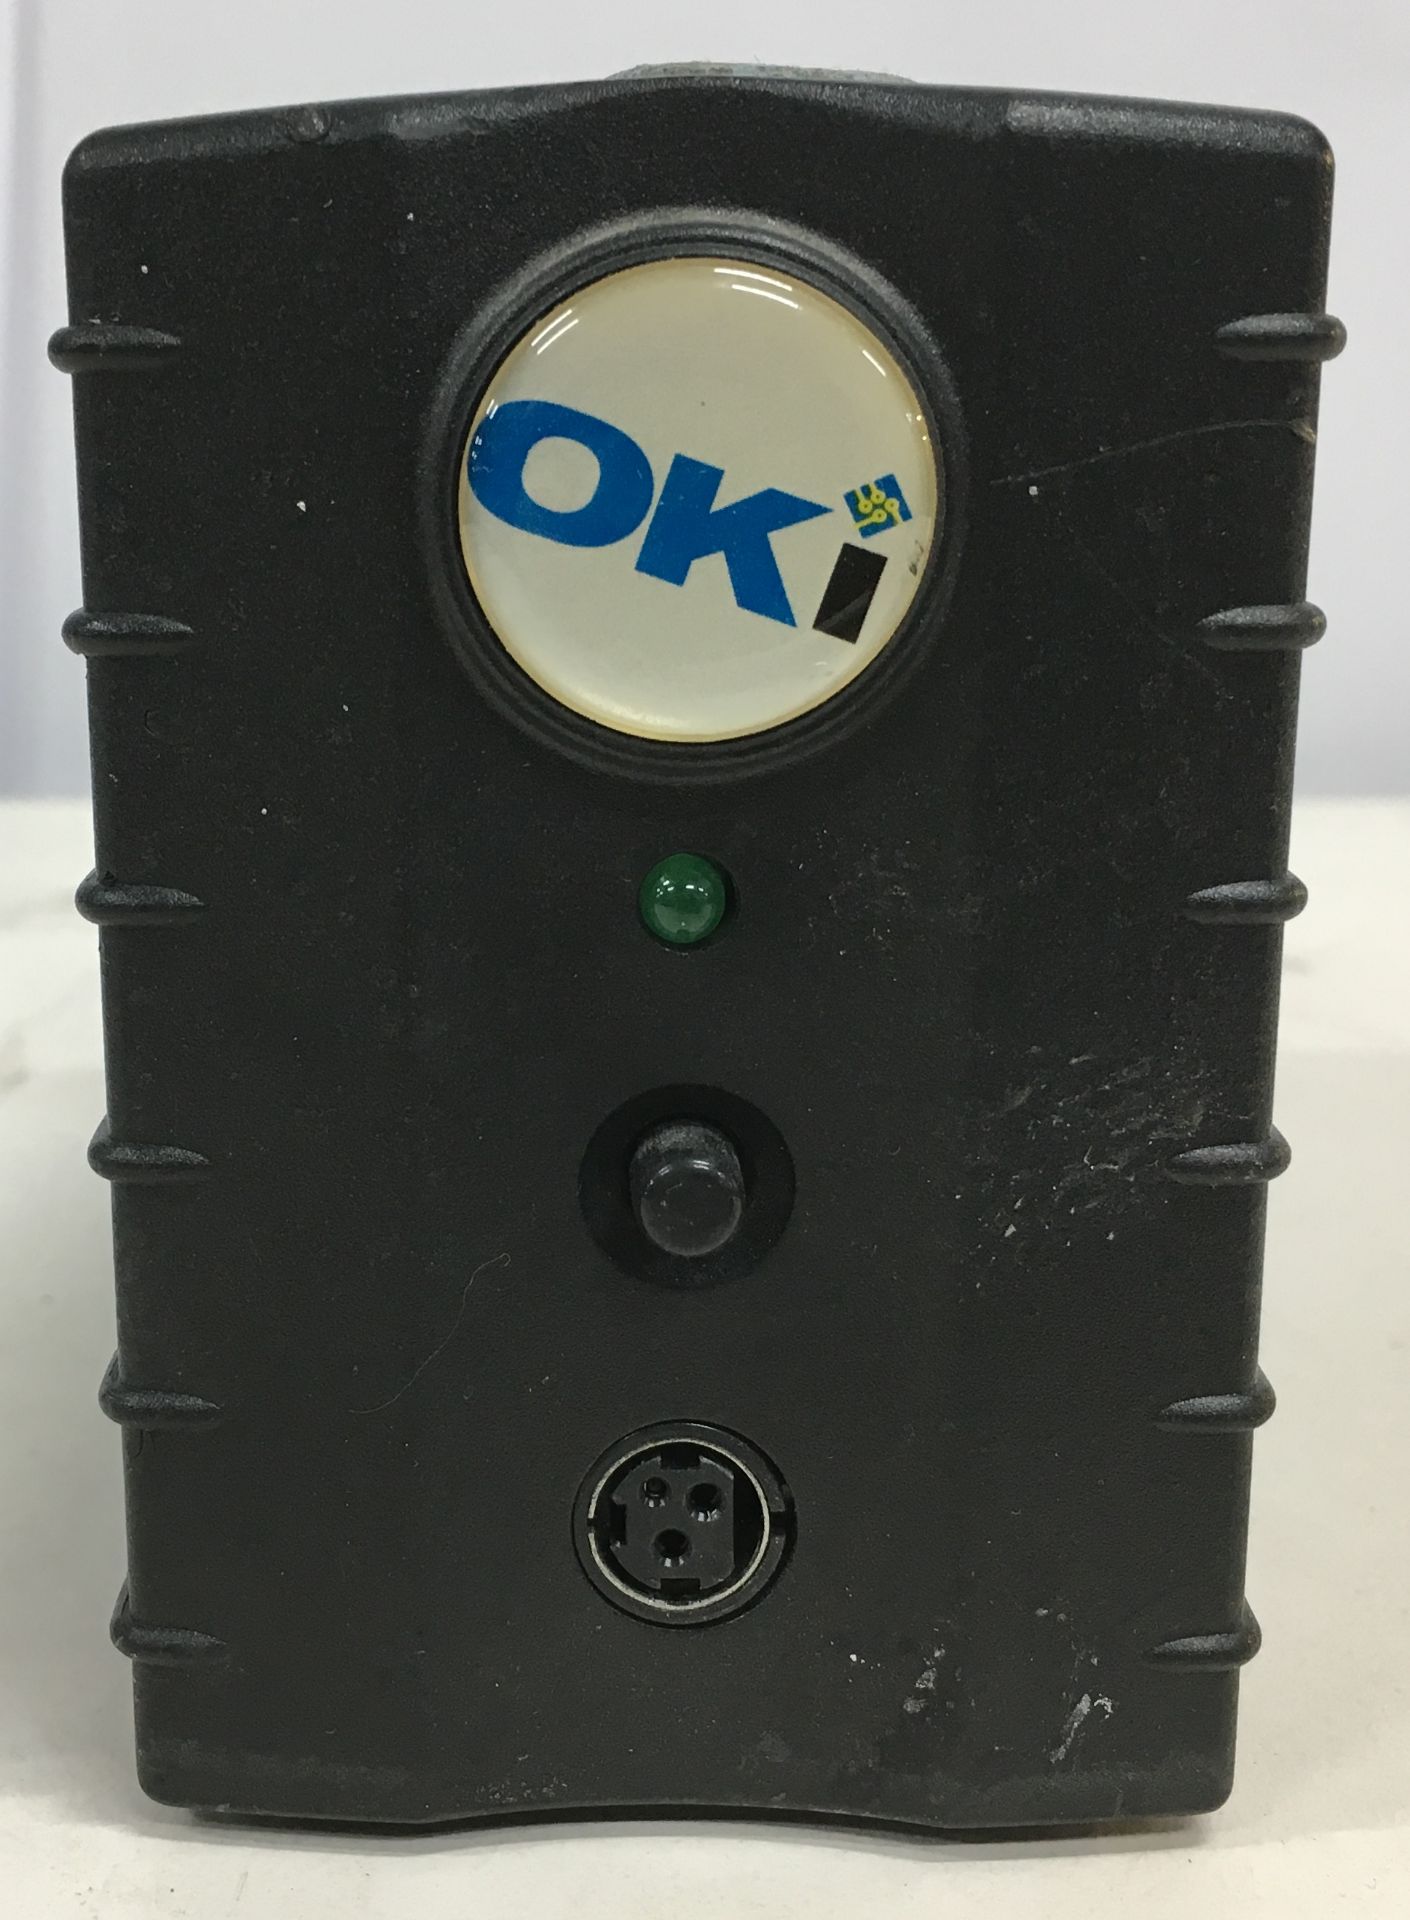 Ok Industries PS-800 Smartheat Soldering Station - Image 2 of 2